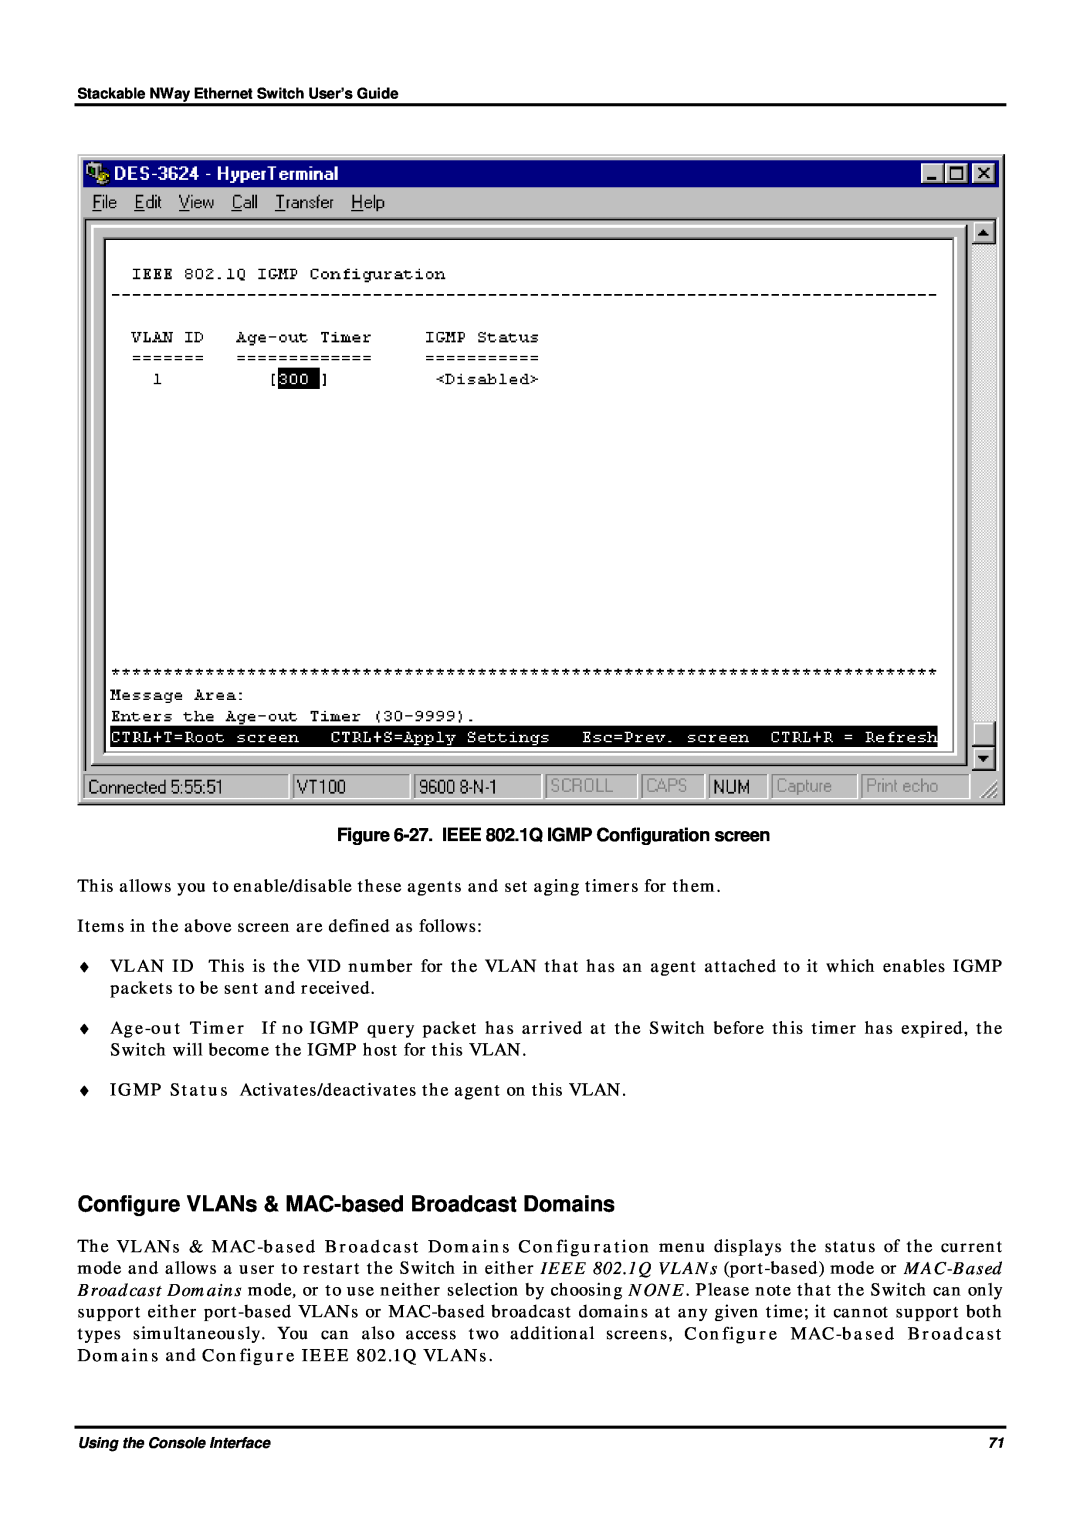 D-Link DES-3624 manual Configure VLANs & MAC-based Broadcast Domains, 27. IEEE 802.1Q IGMP Configuration screen 